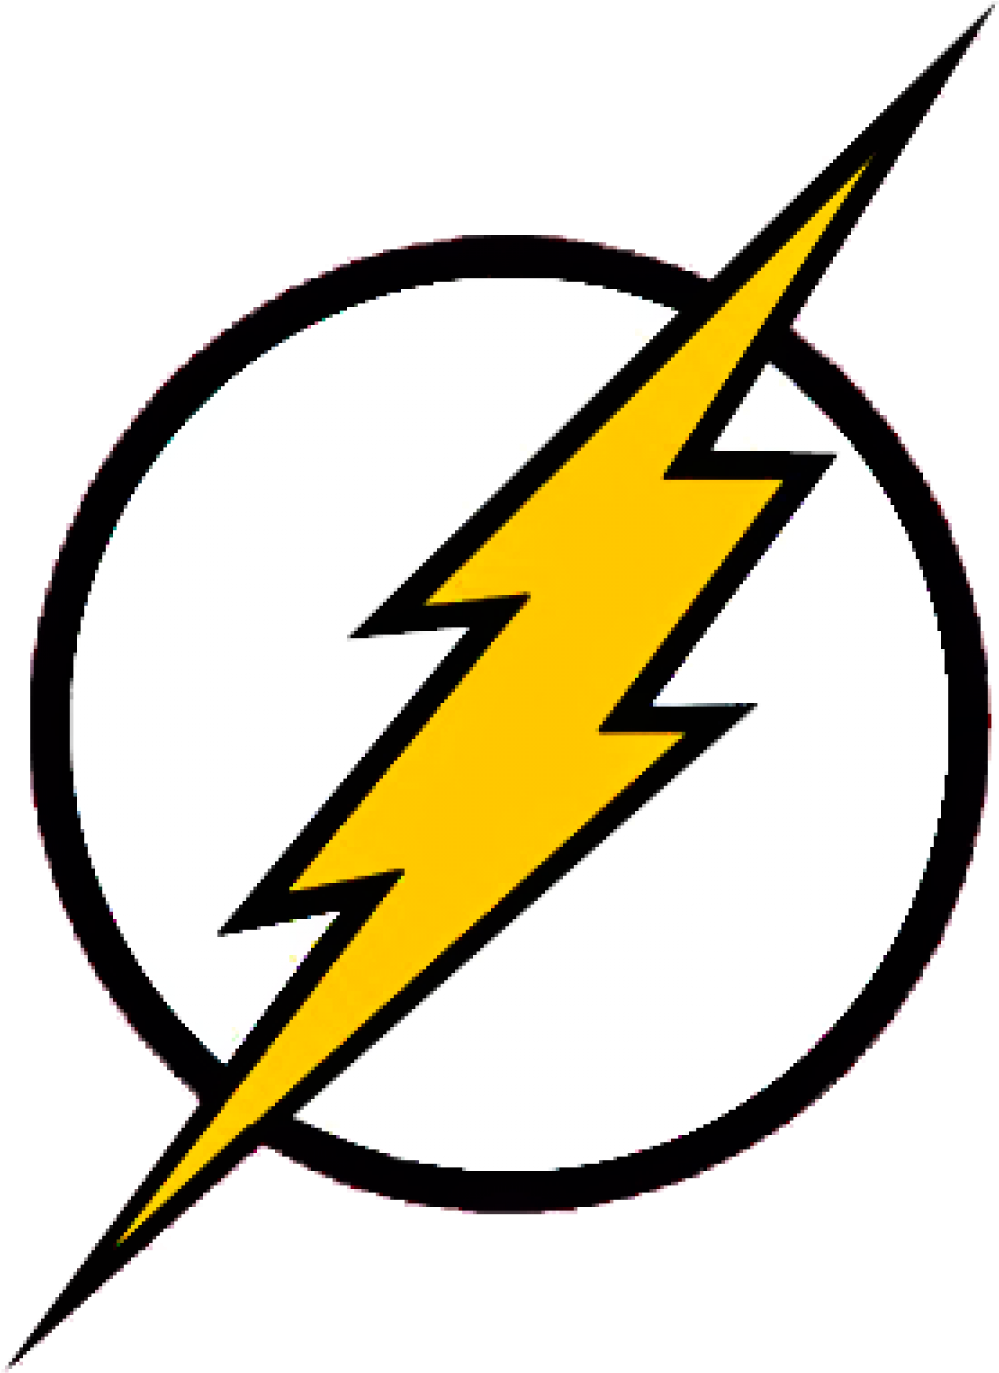 The Flash Emblem PNG image